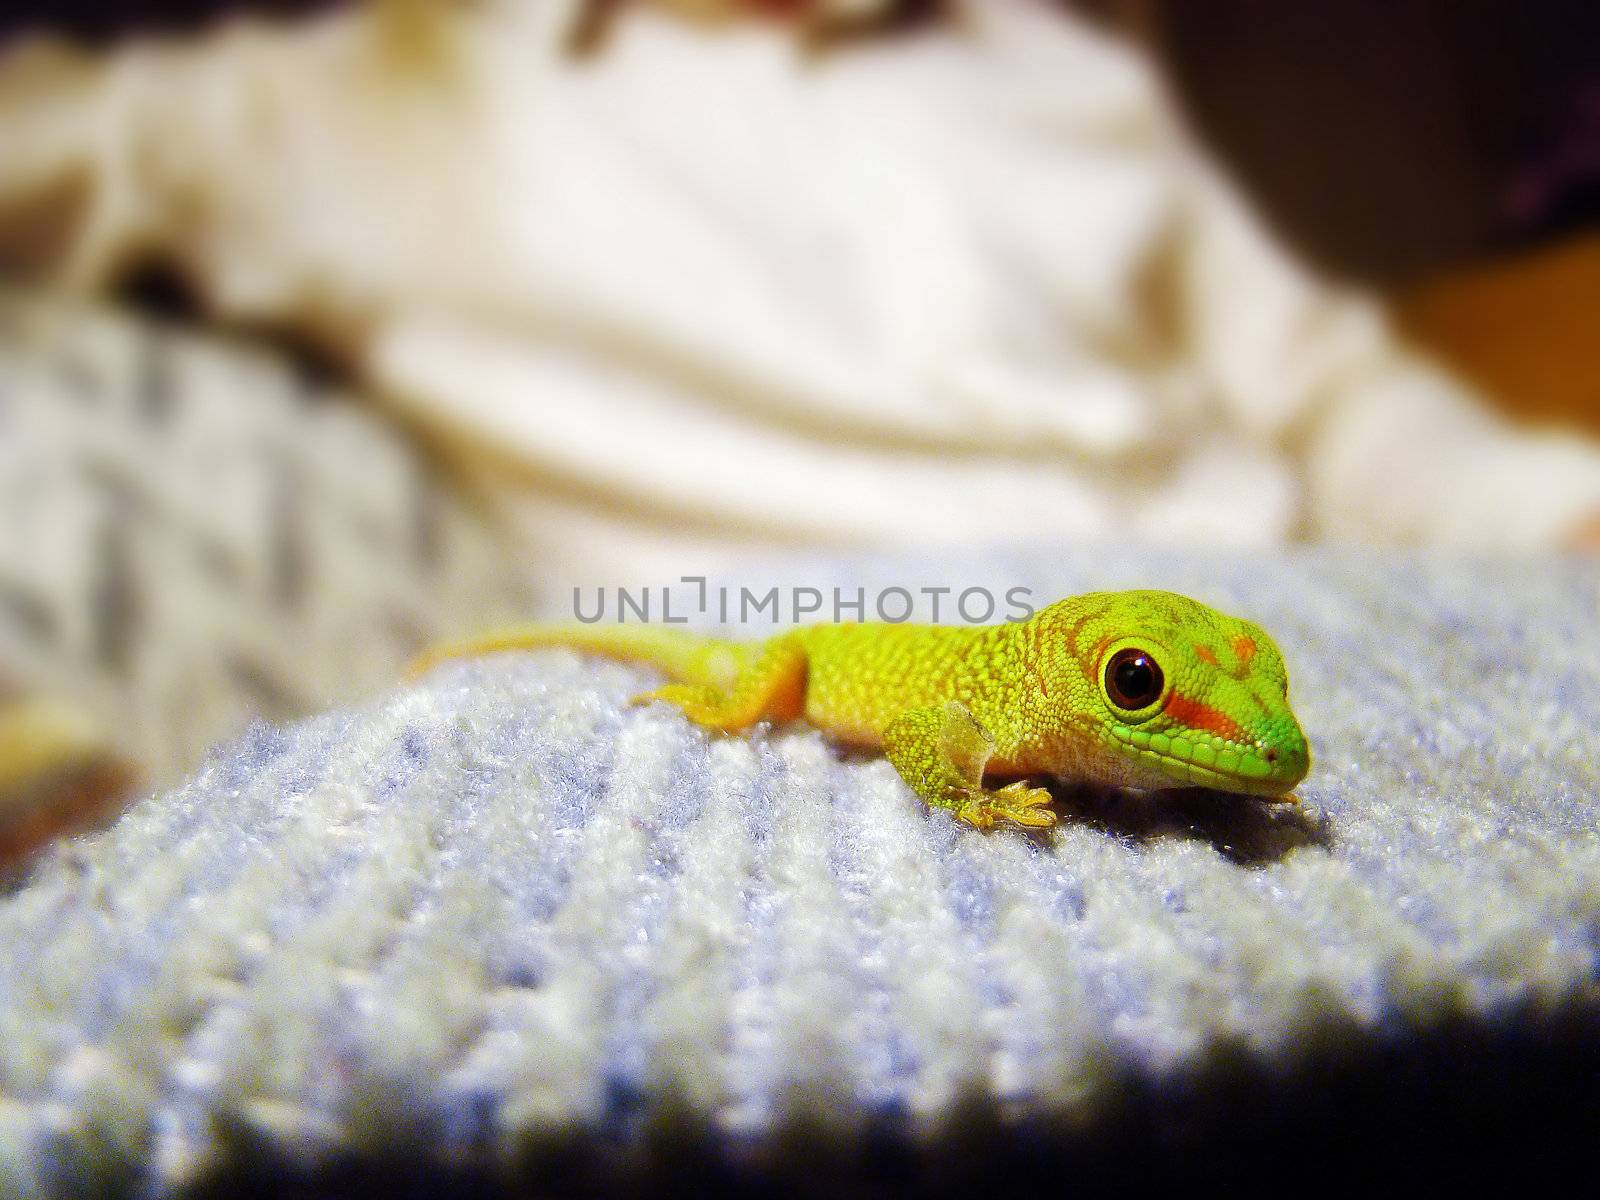 a baby madagascar giant day gecko